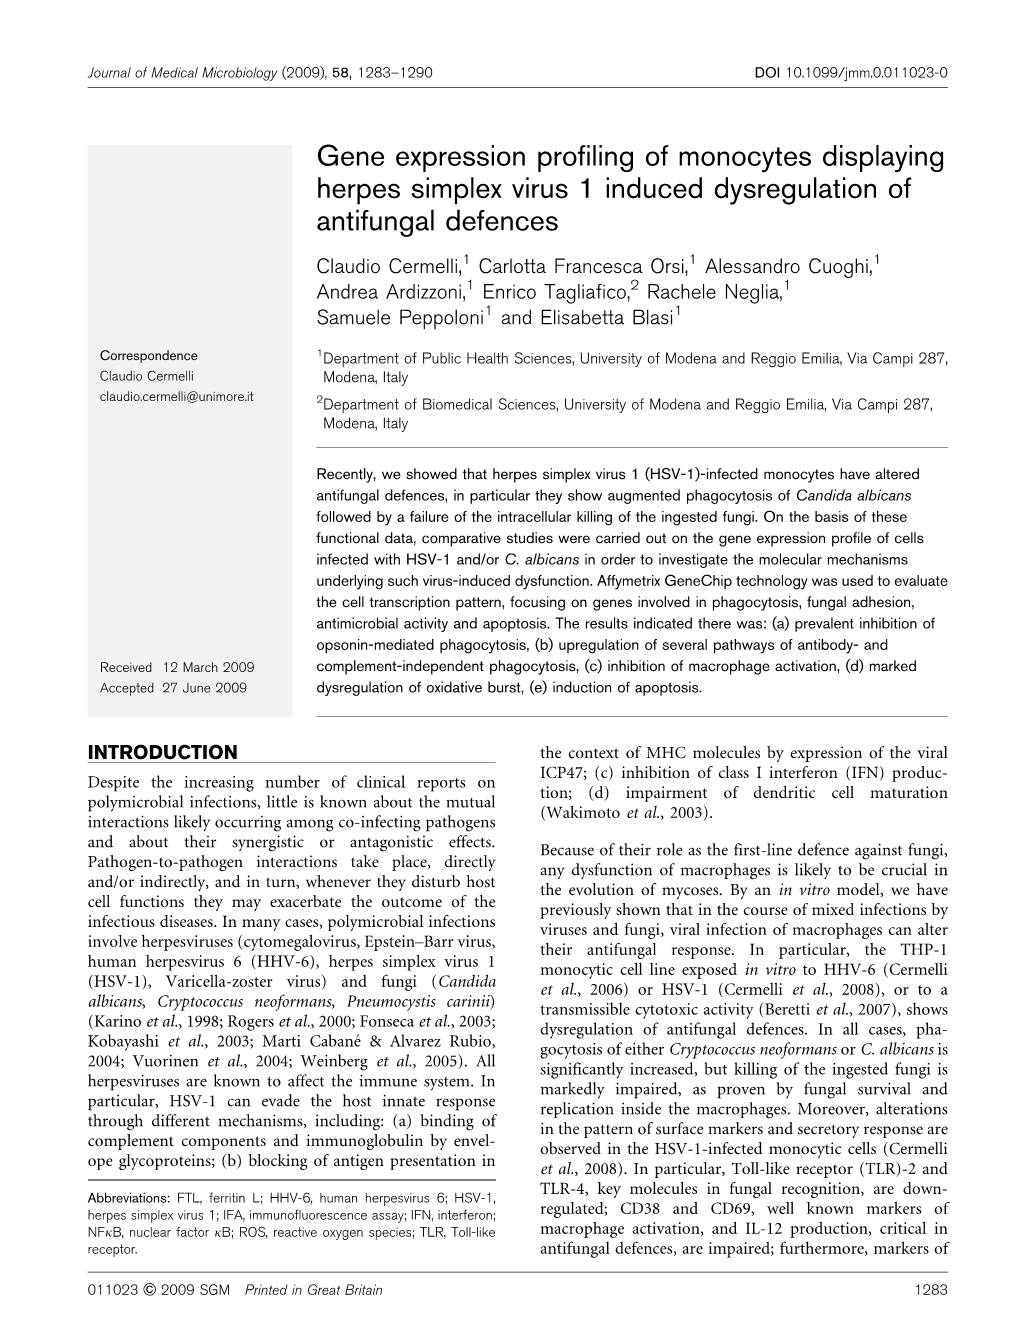 Gene Expression Profiling of Monocytes Displaying Herpes Simplex Virus 1 Induced Dysregulation of Antifungal Defences